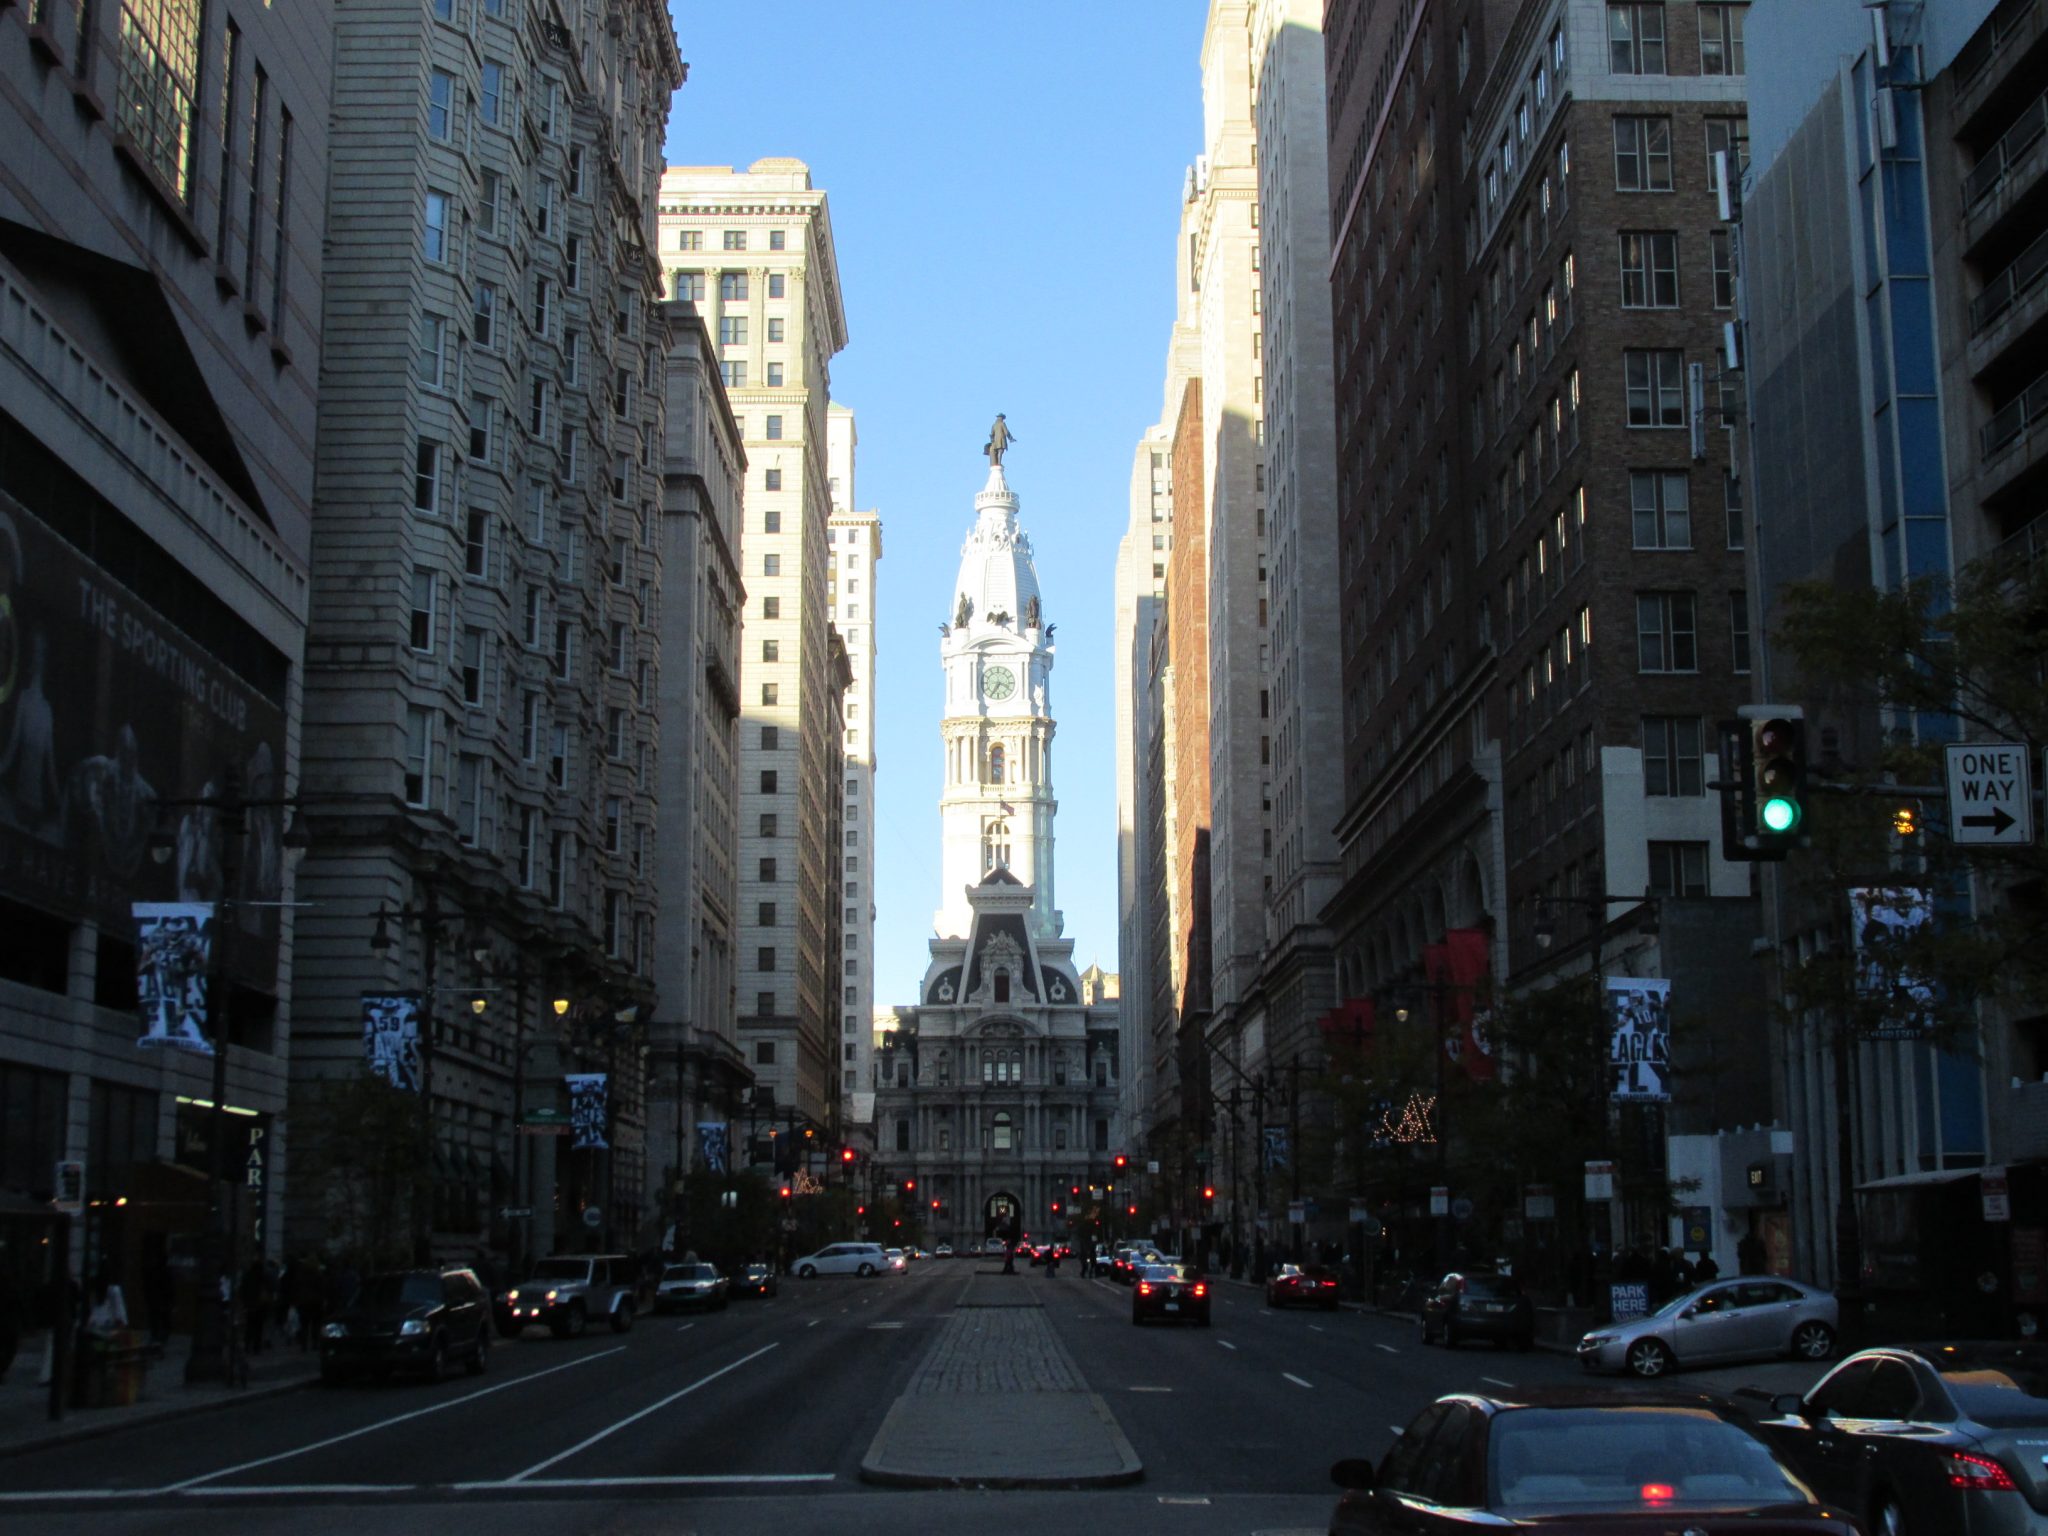 View from Broad Street in Philadelphia, Pennsylvania